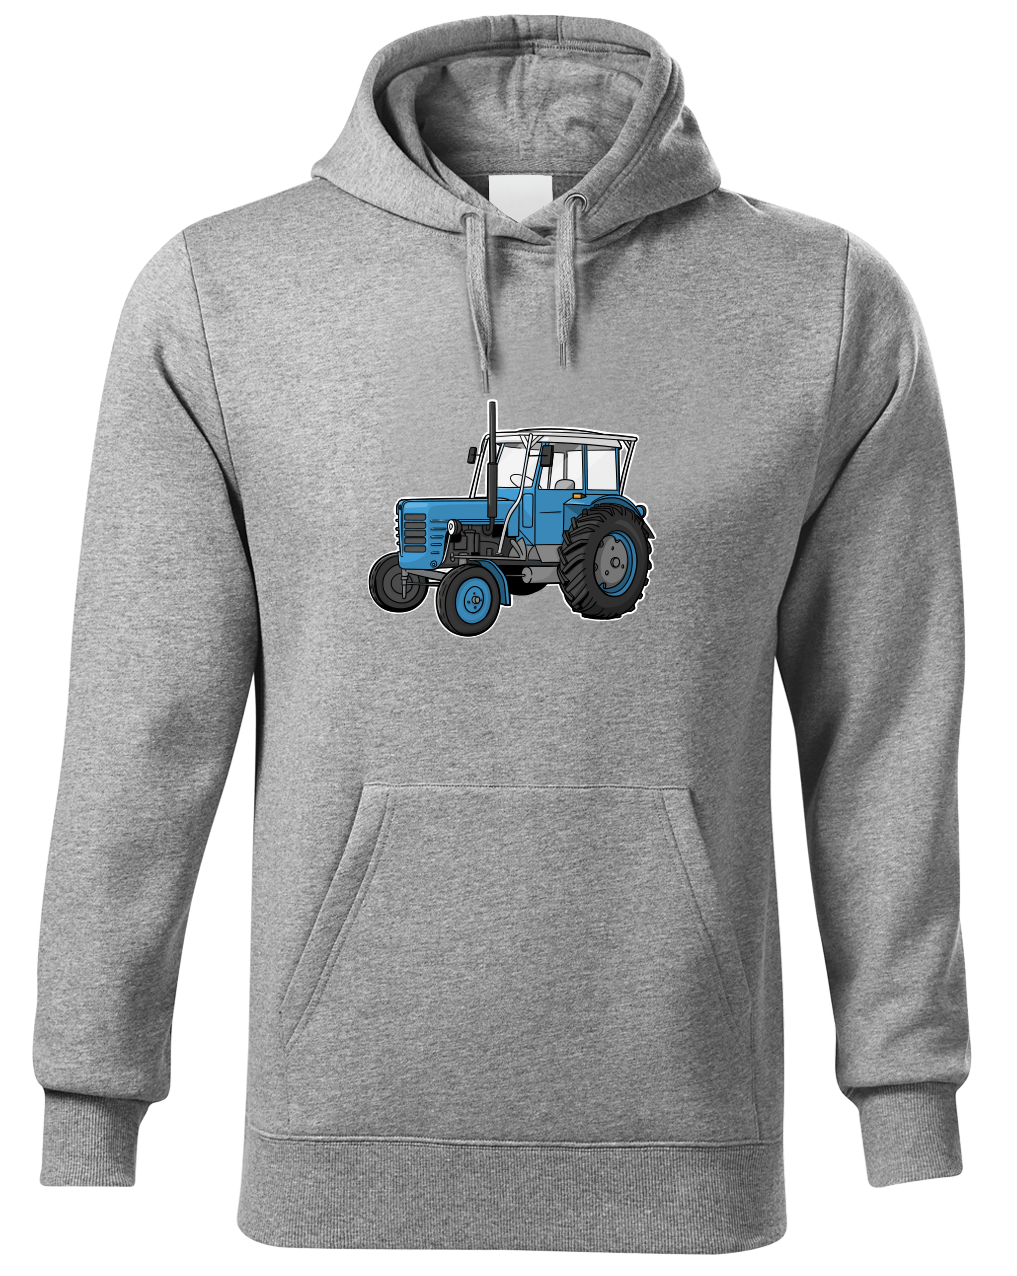 Mikina s traktorem - Starý traktor Velikost: S, Barva: Světle šedá